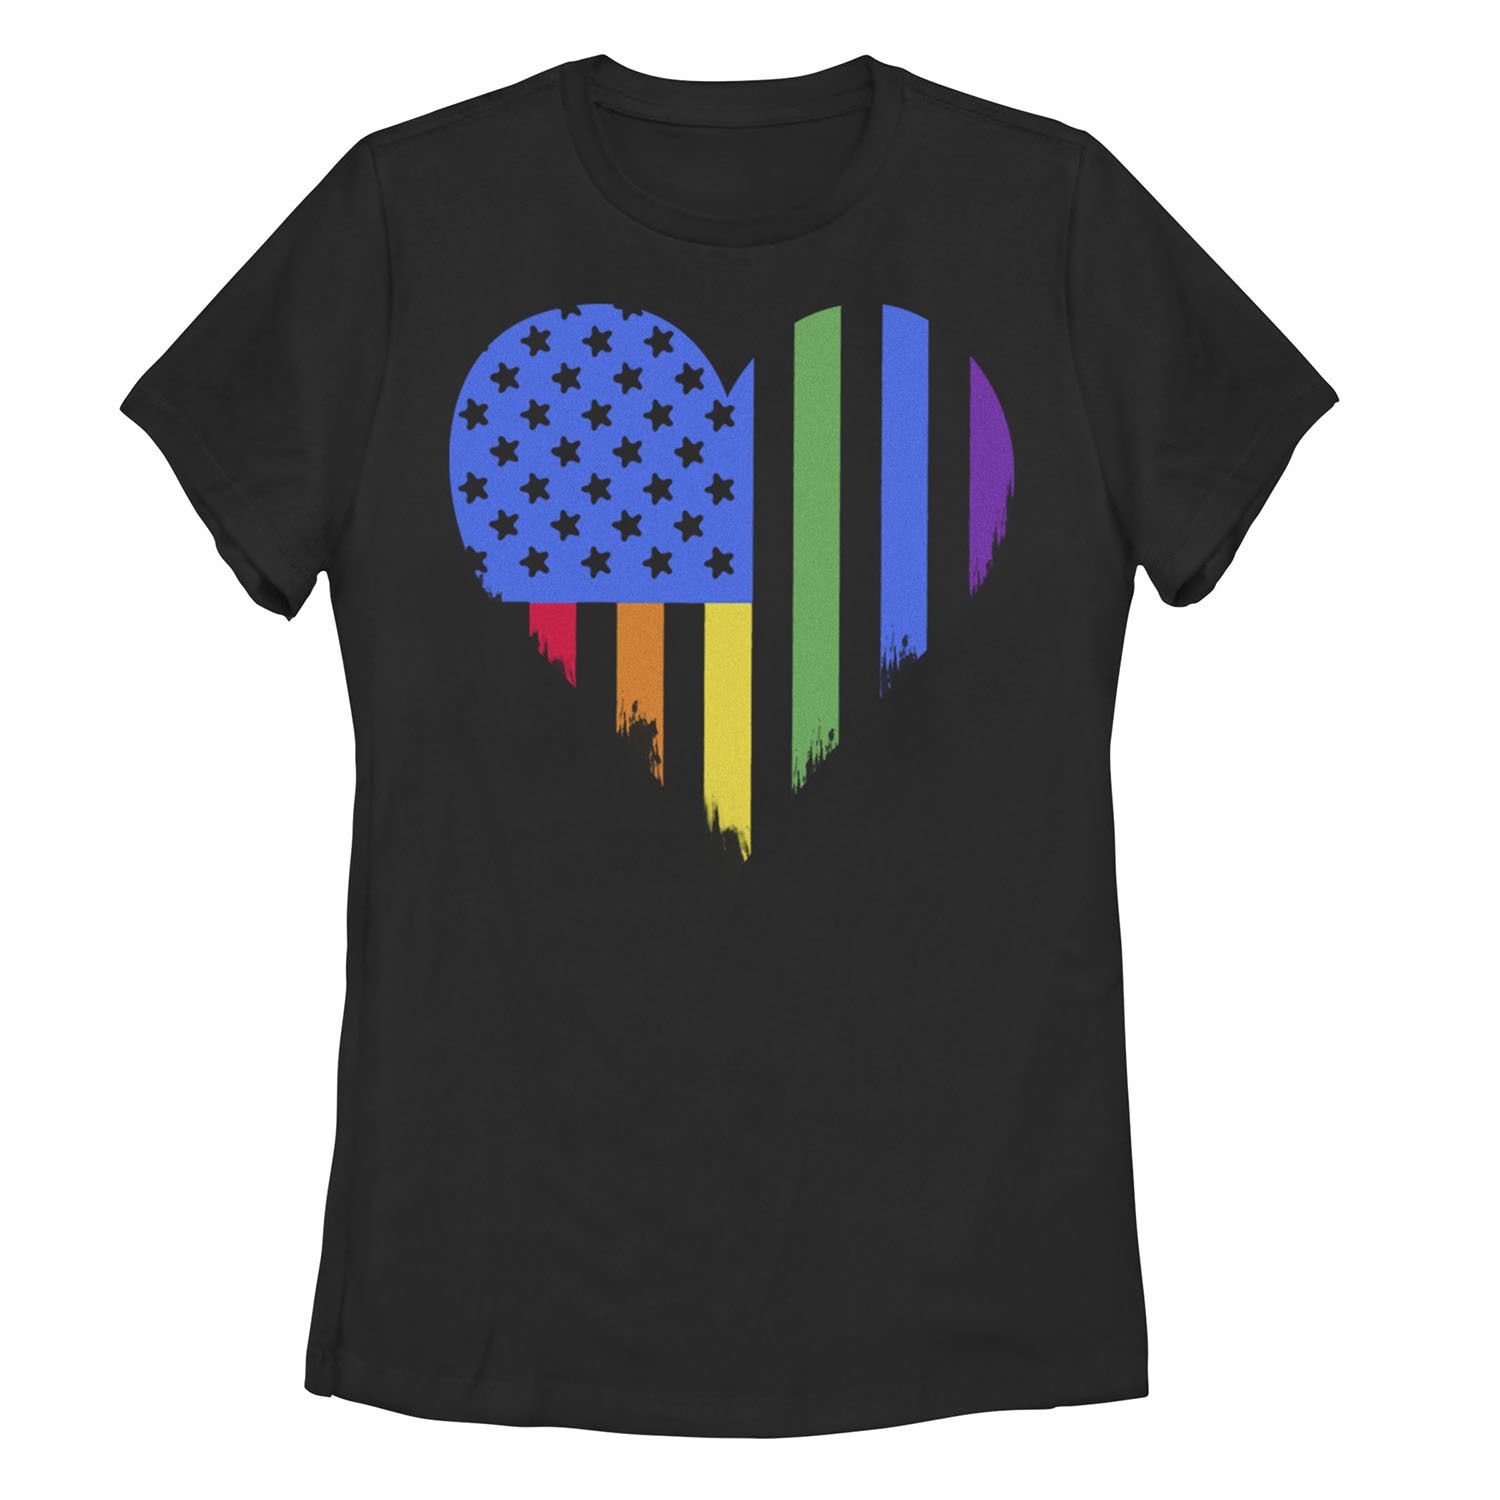 Юниорская футболка с графическим рисунком Pride American Heart Rainbow Flag Pride gilbert original sapphic pride lgbt lbpq gray woman flag